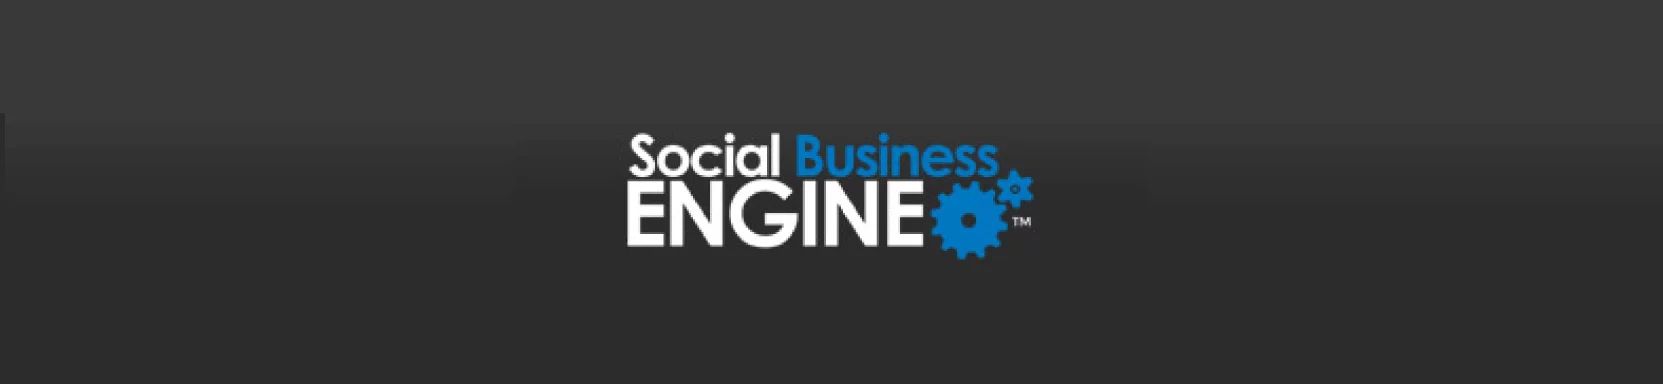 Social Business Engine Social media Marketing Podcast